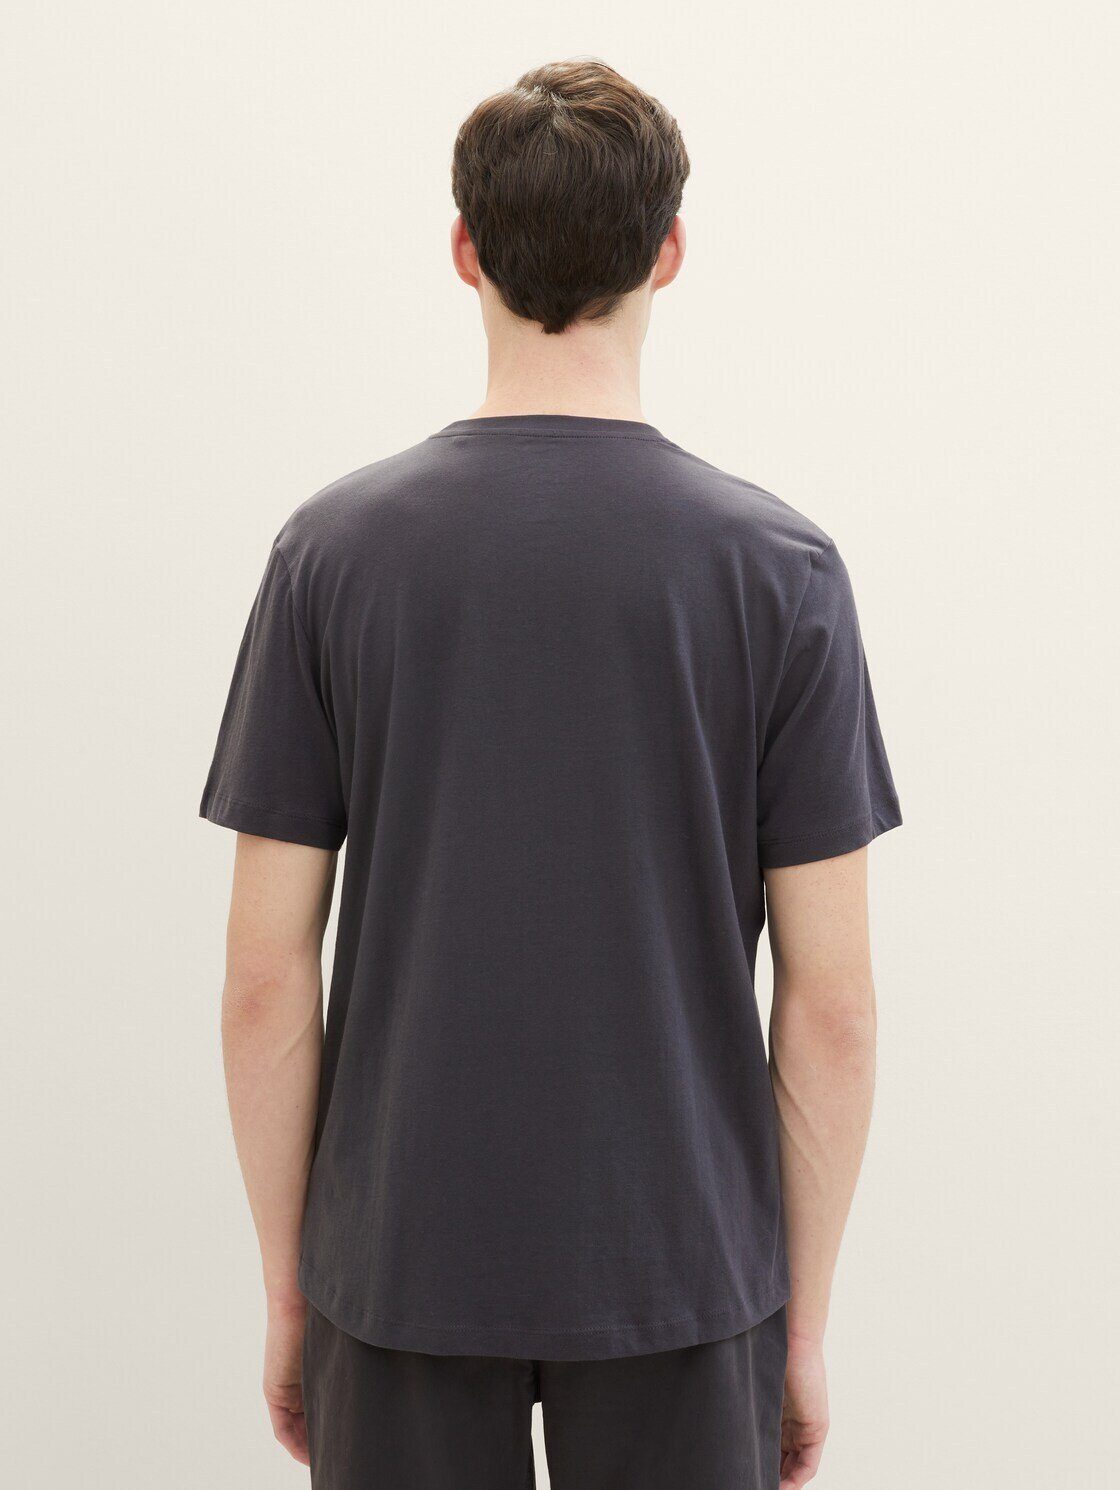 coal Denim TAILOR grey T-Shirt mit TOM Bio-Baumwolle T-Shirt